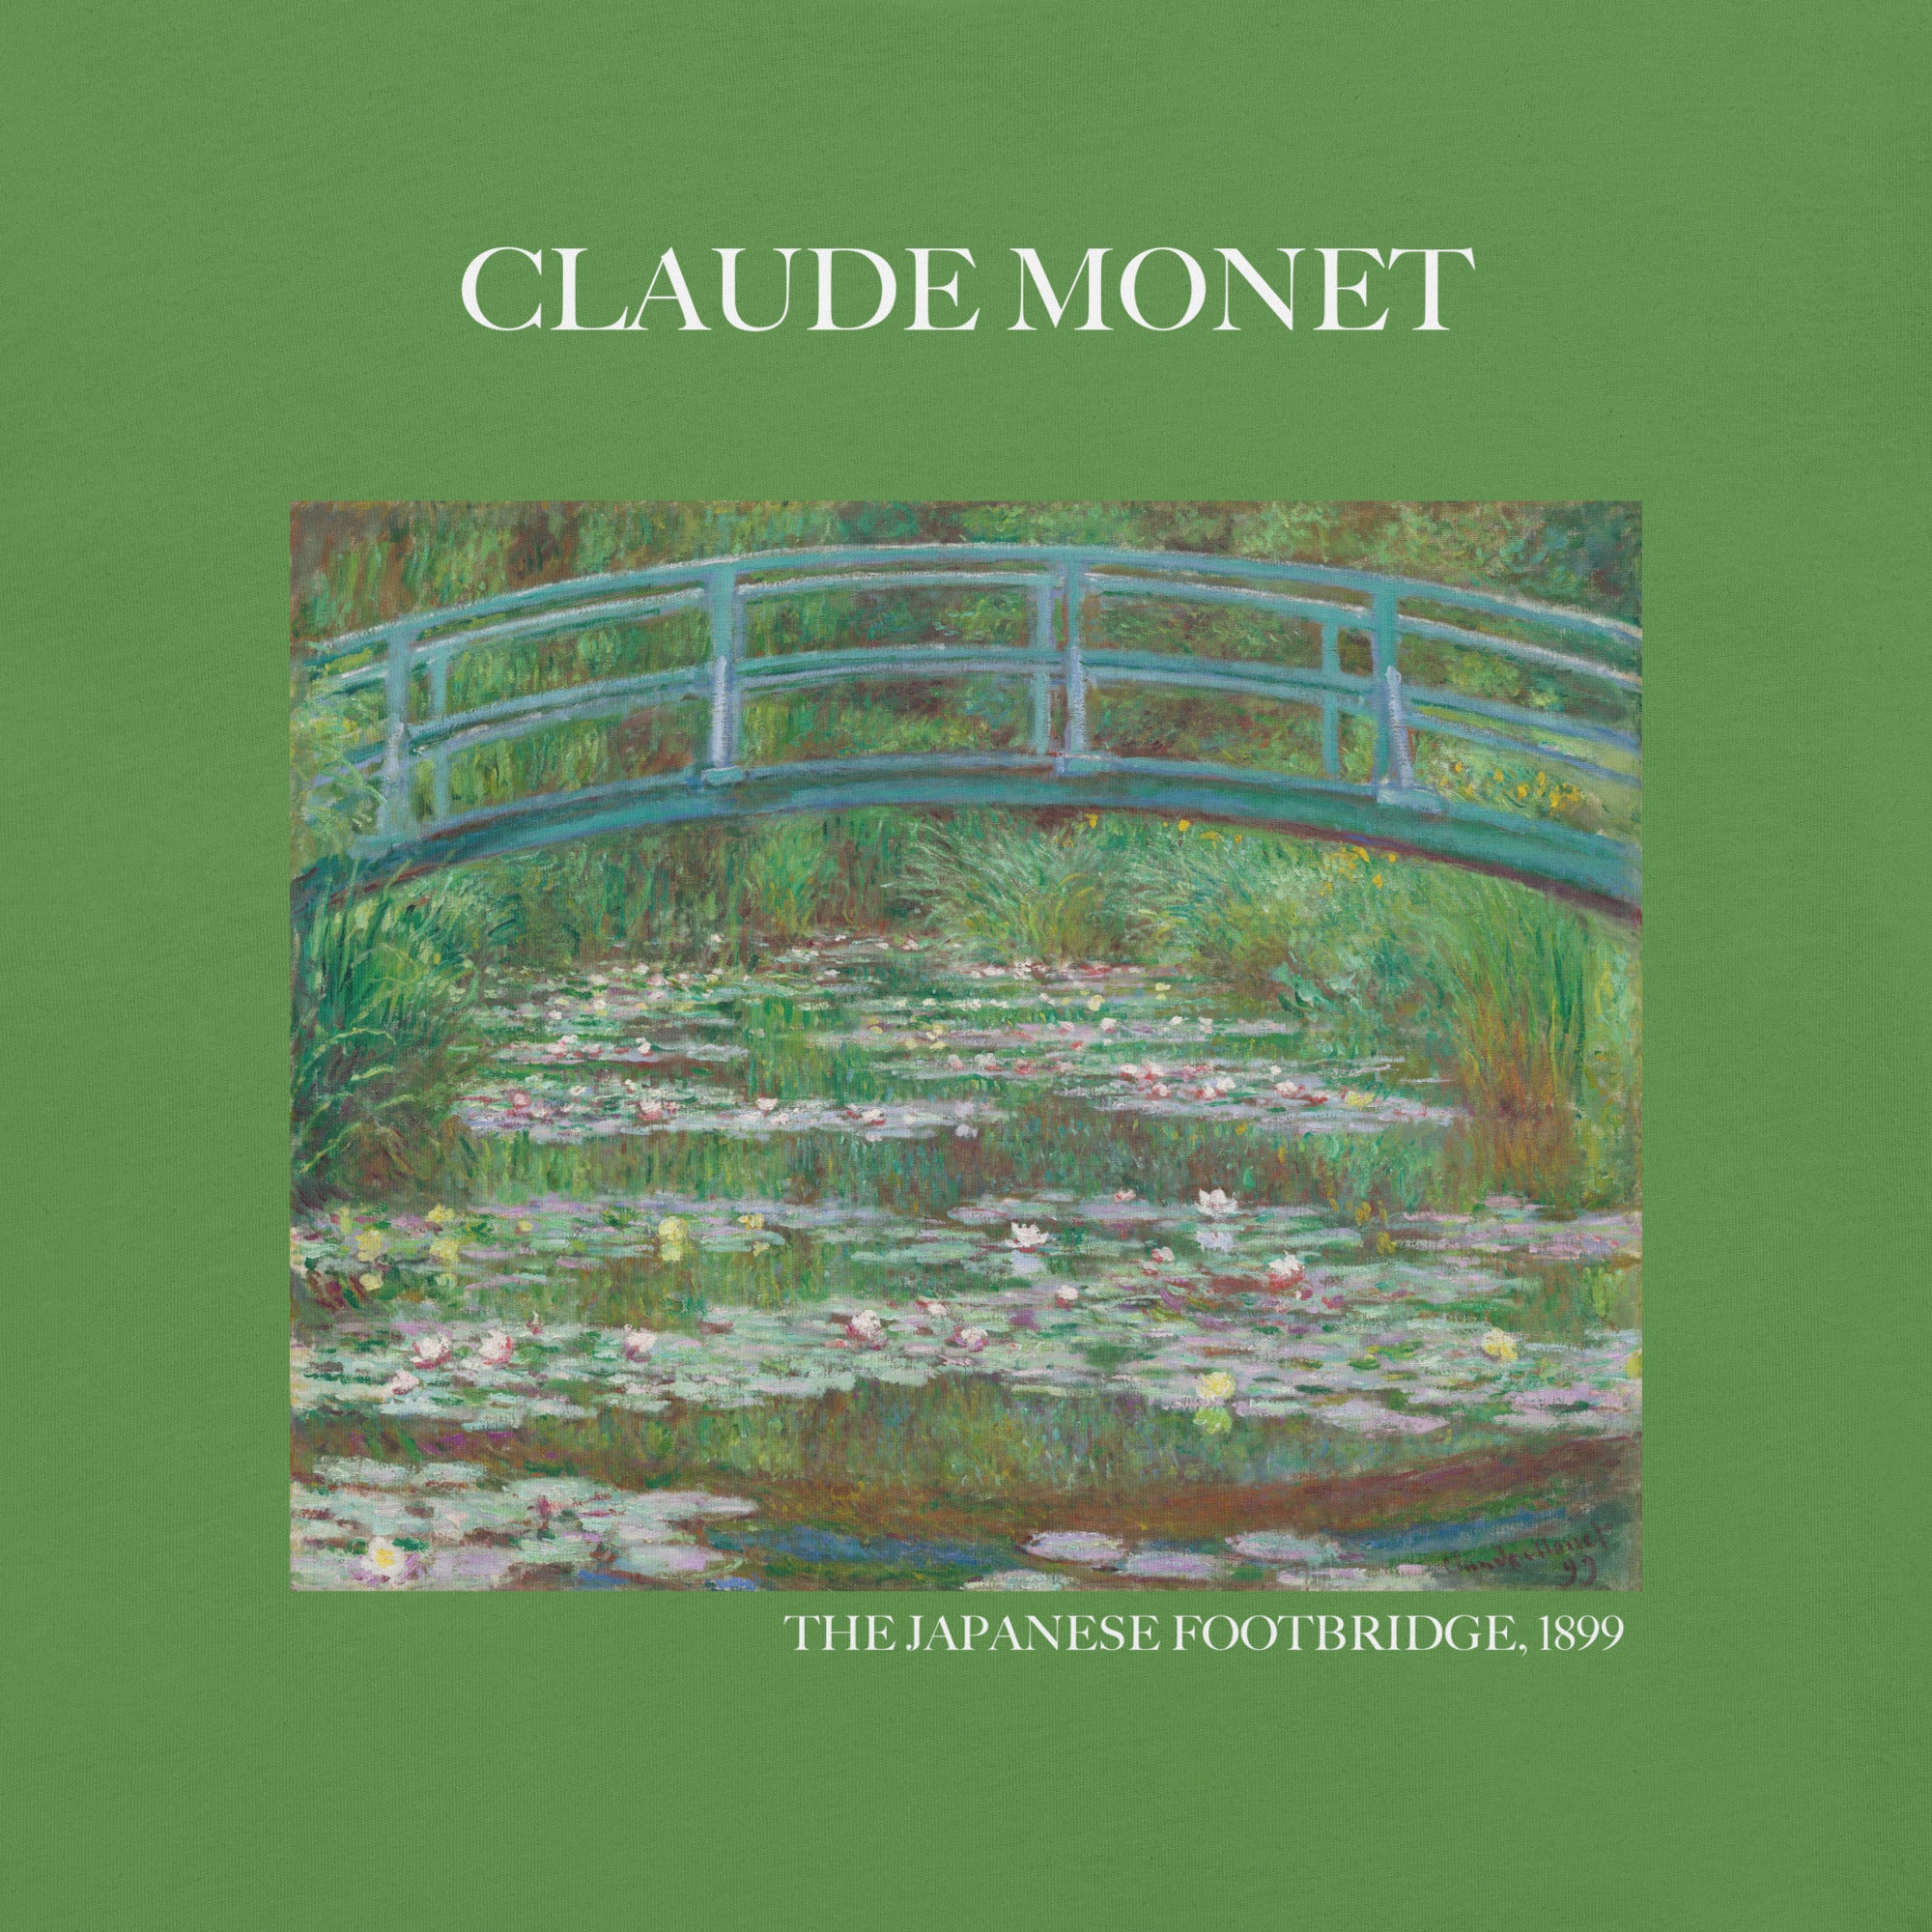 Claude Monet 'The Japanese Footbridge' Famous Painting T-Shirt | Unisex Classic Art Tee